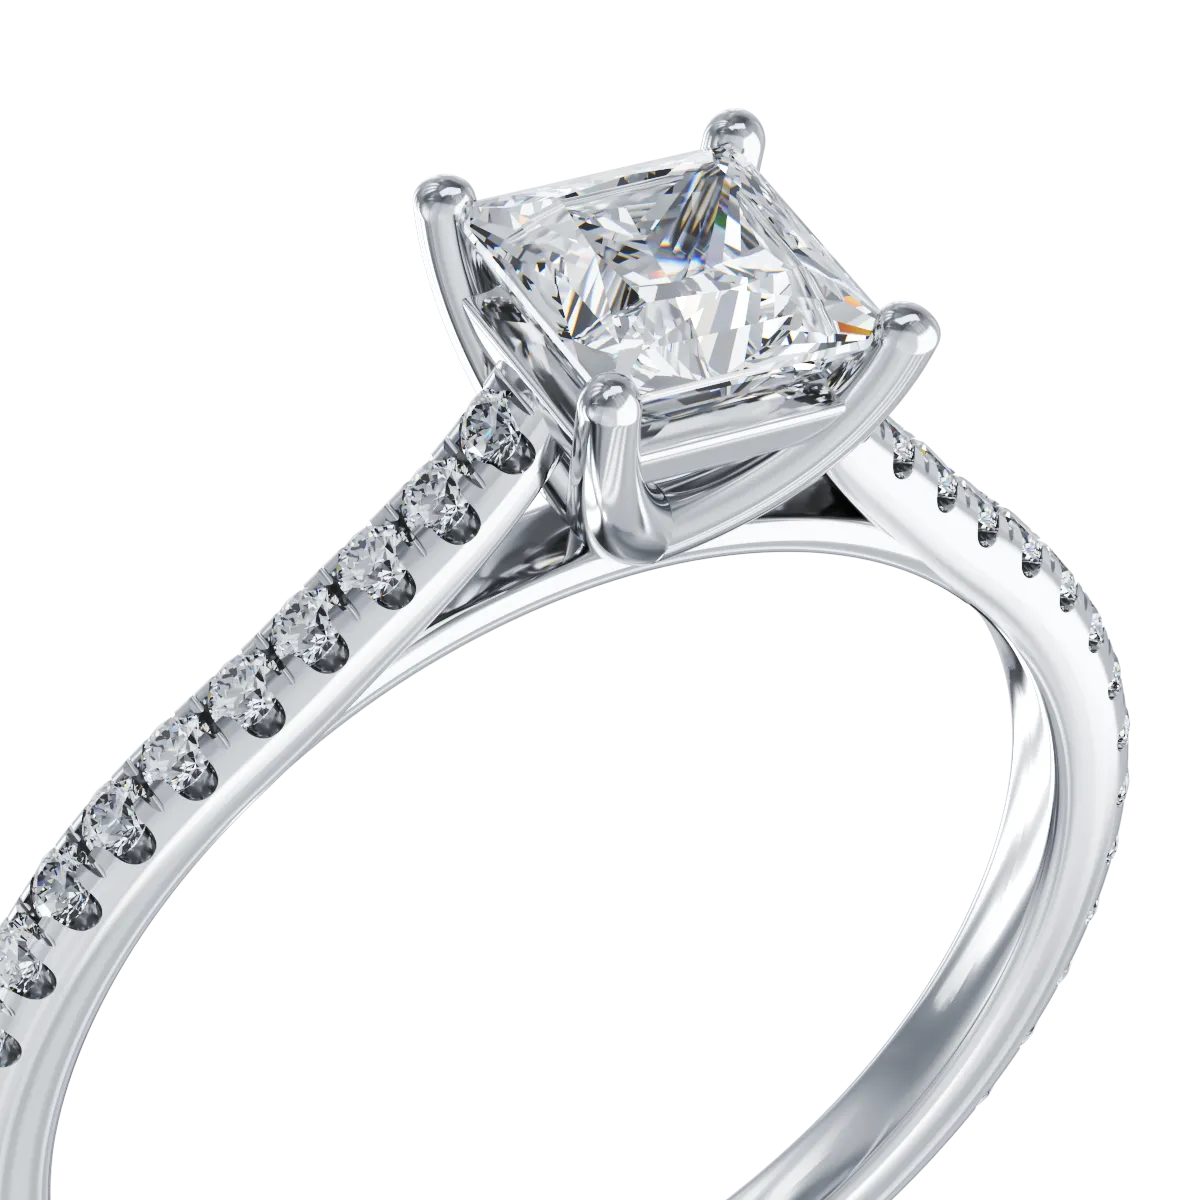 Platinum engagement ring with 0.6ct diamond and 0.19ct diamonds